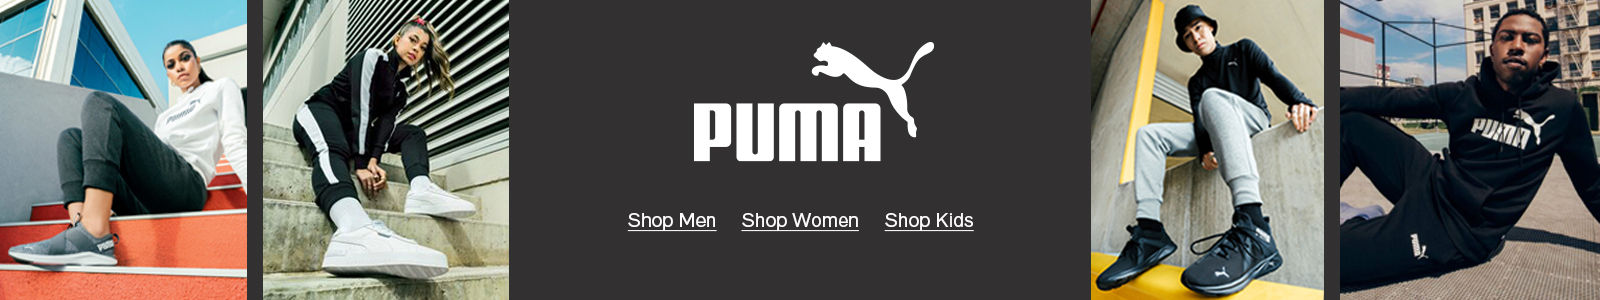 Puma, Shop Men, Shop Women, Shop Kids